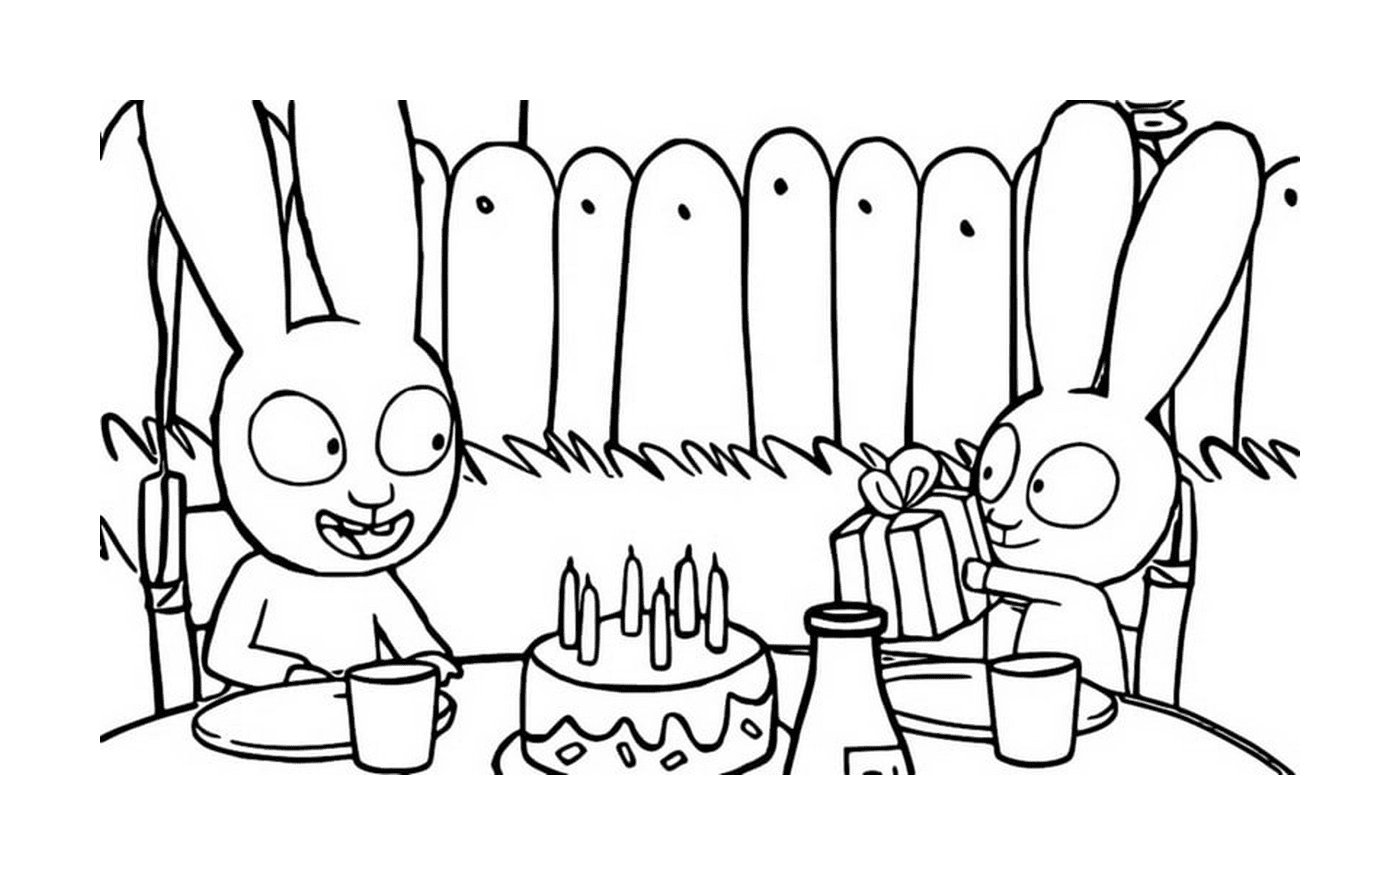  Simon's birthday, joyous celebration 